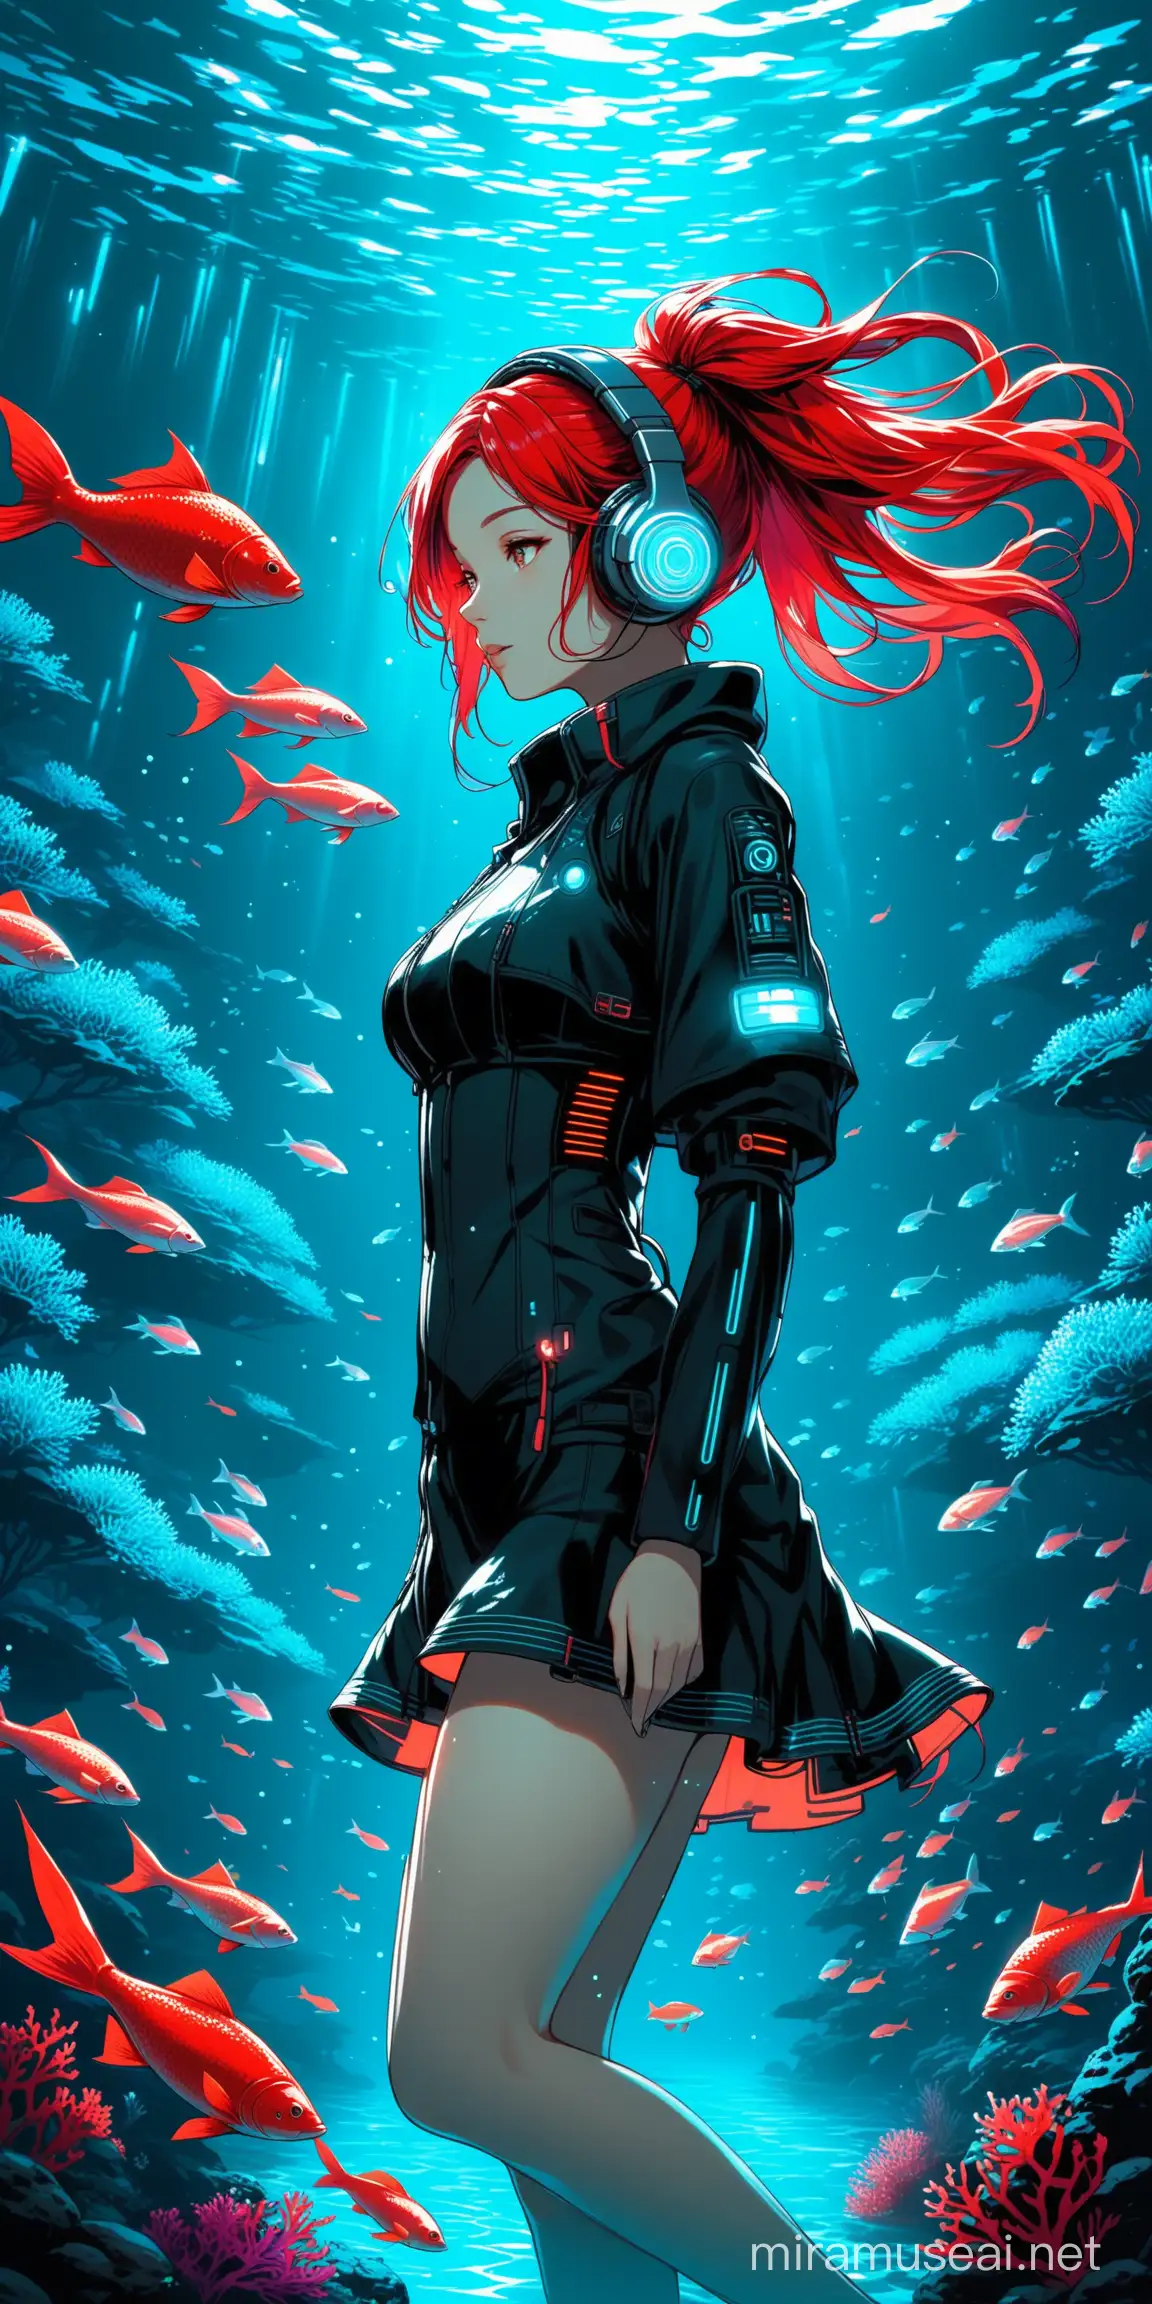 Cyberpunk Girl Listening to Music in Bioluminescent Underwater Garden with Red Fish